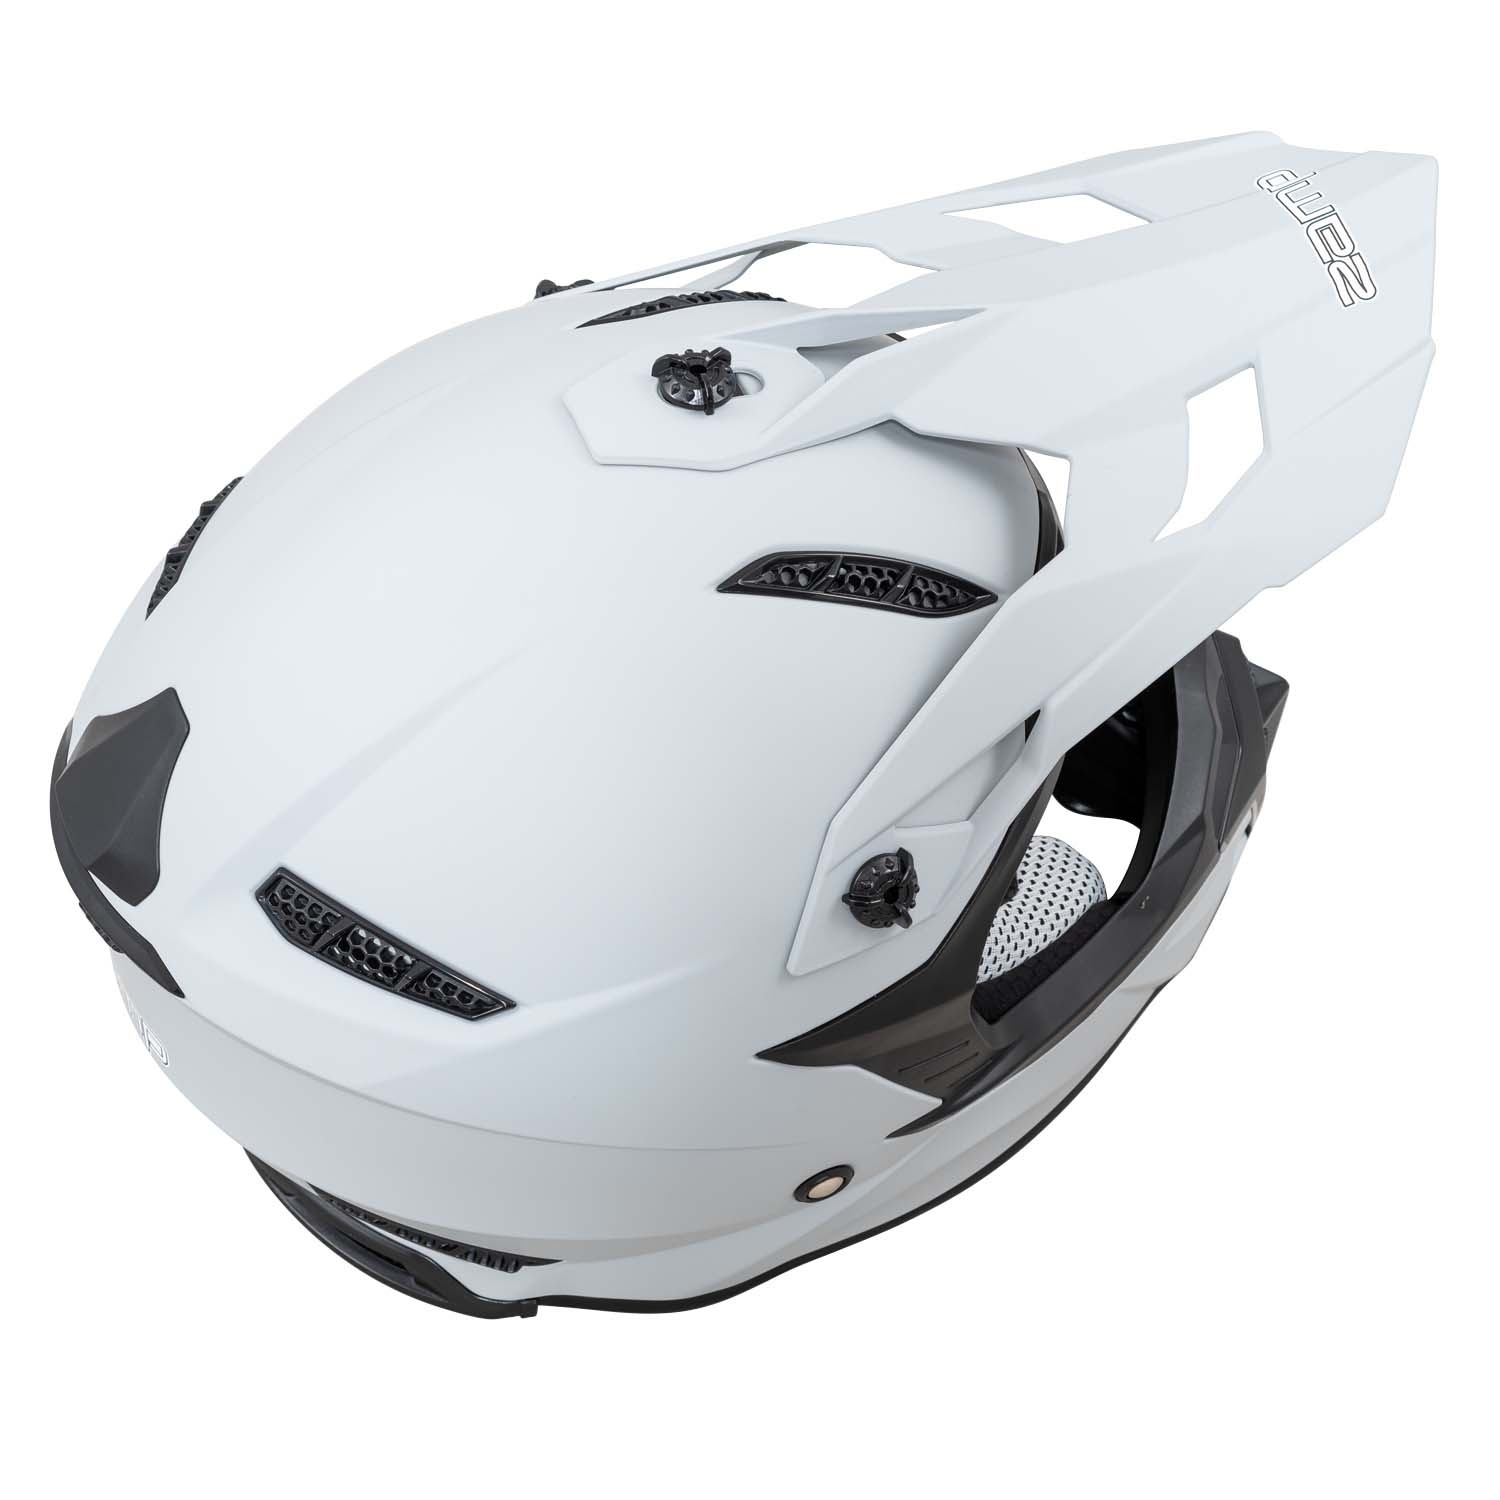 FS-9 Matte Gray Graphic Helmet